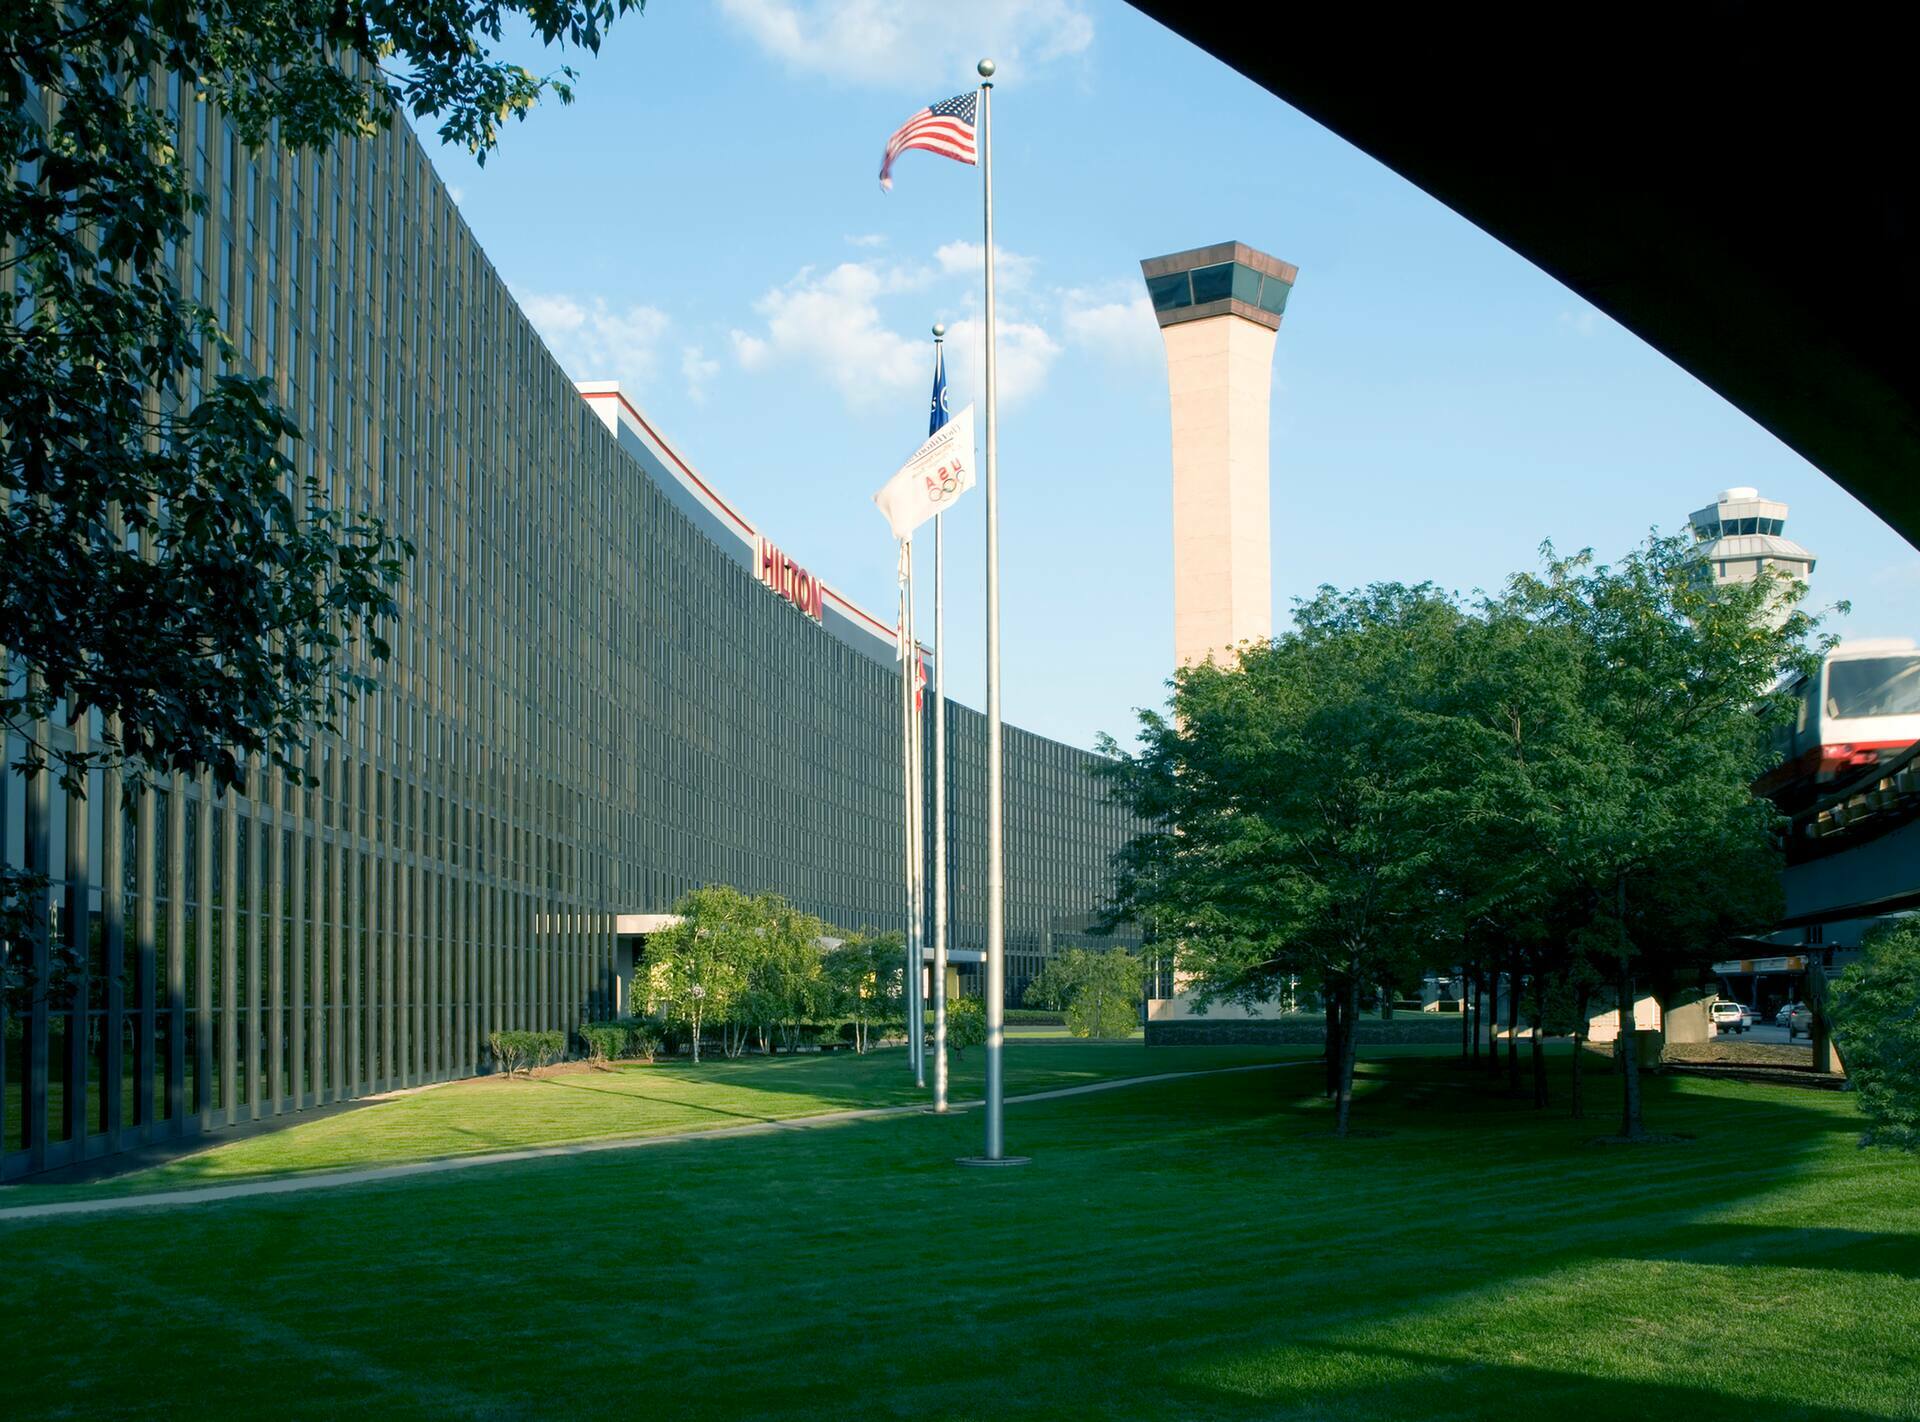 Photo of Hilton Chicago O'Hare Airport, Chicago, IL